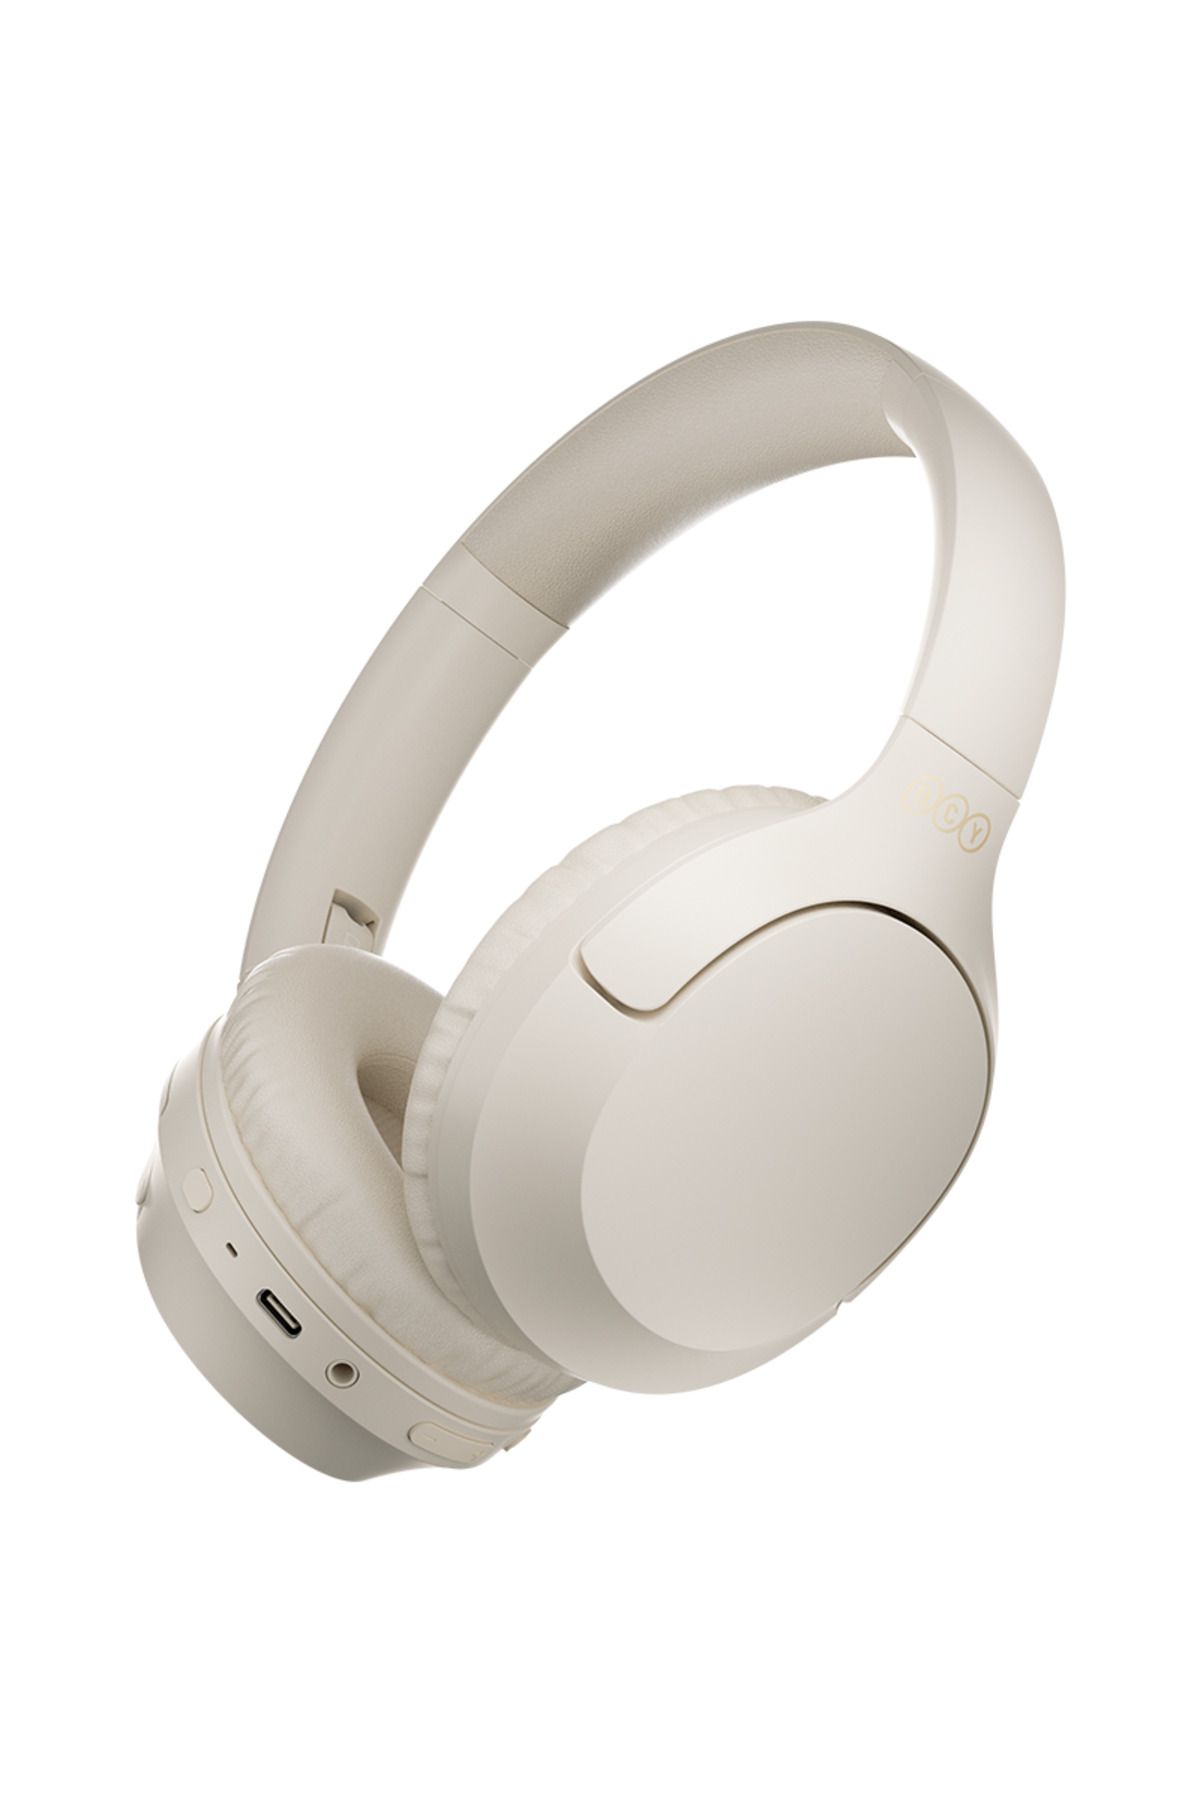 Qcy H2 Pro Aux Kablosuz Bt 5.3 Beyaz Kulaklık Hifi Enc 70 Saat Dinleme Oyun Modu